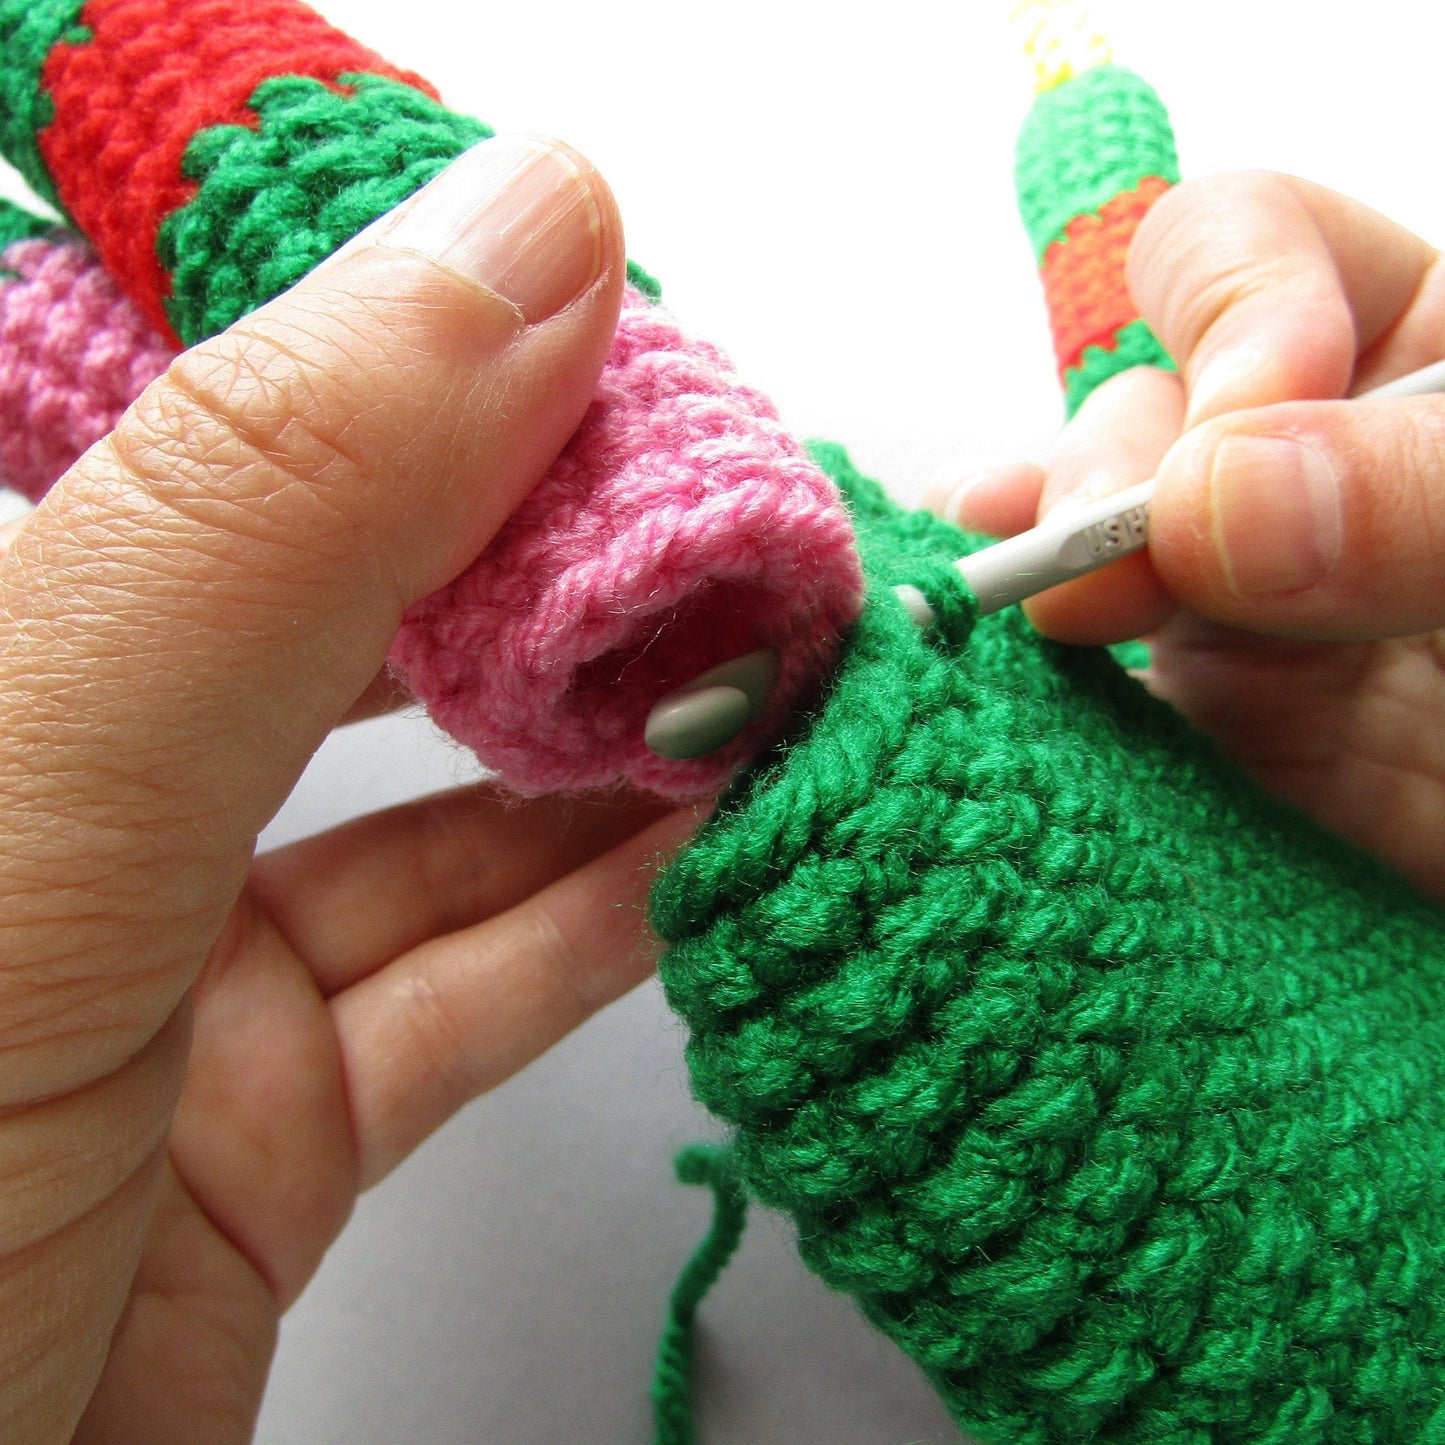 Crochet kit: Amigurumi Monster